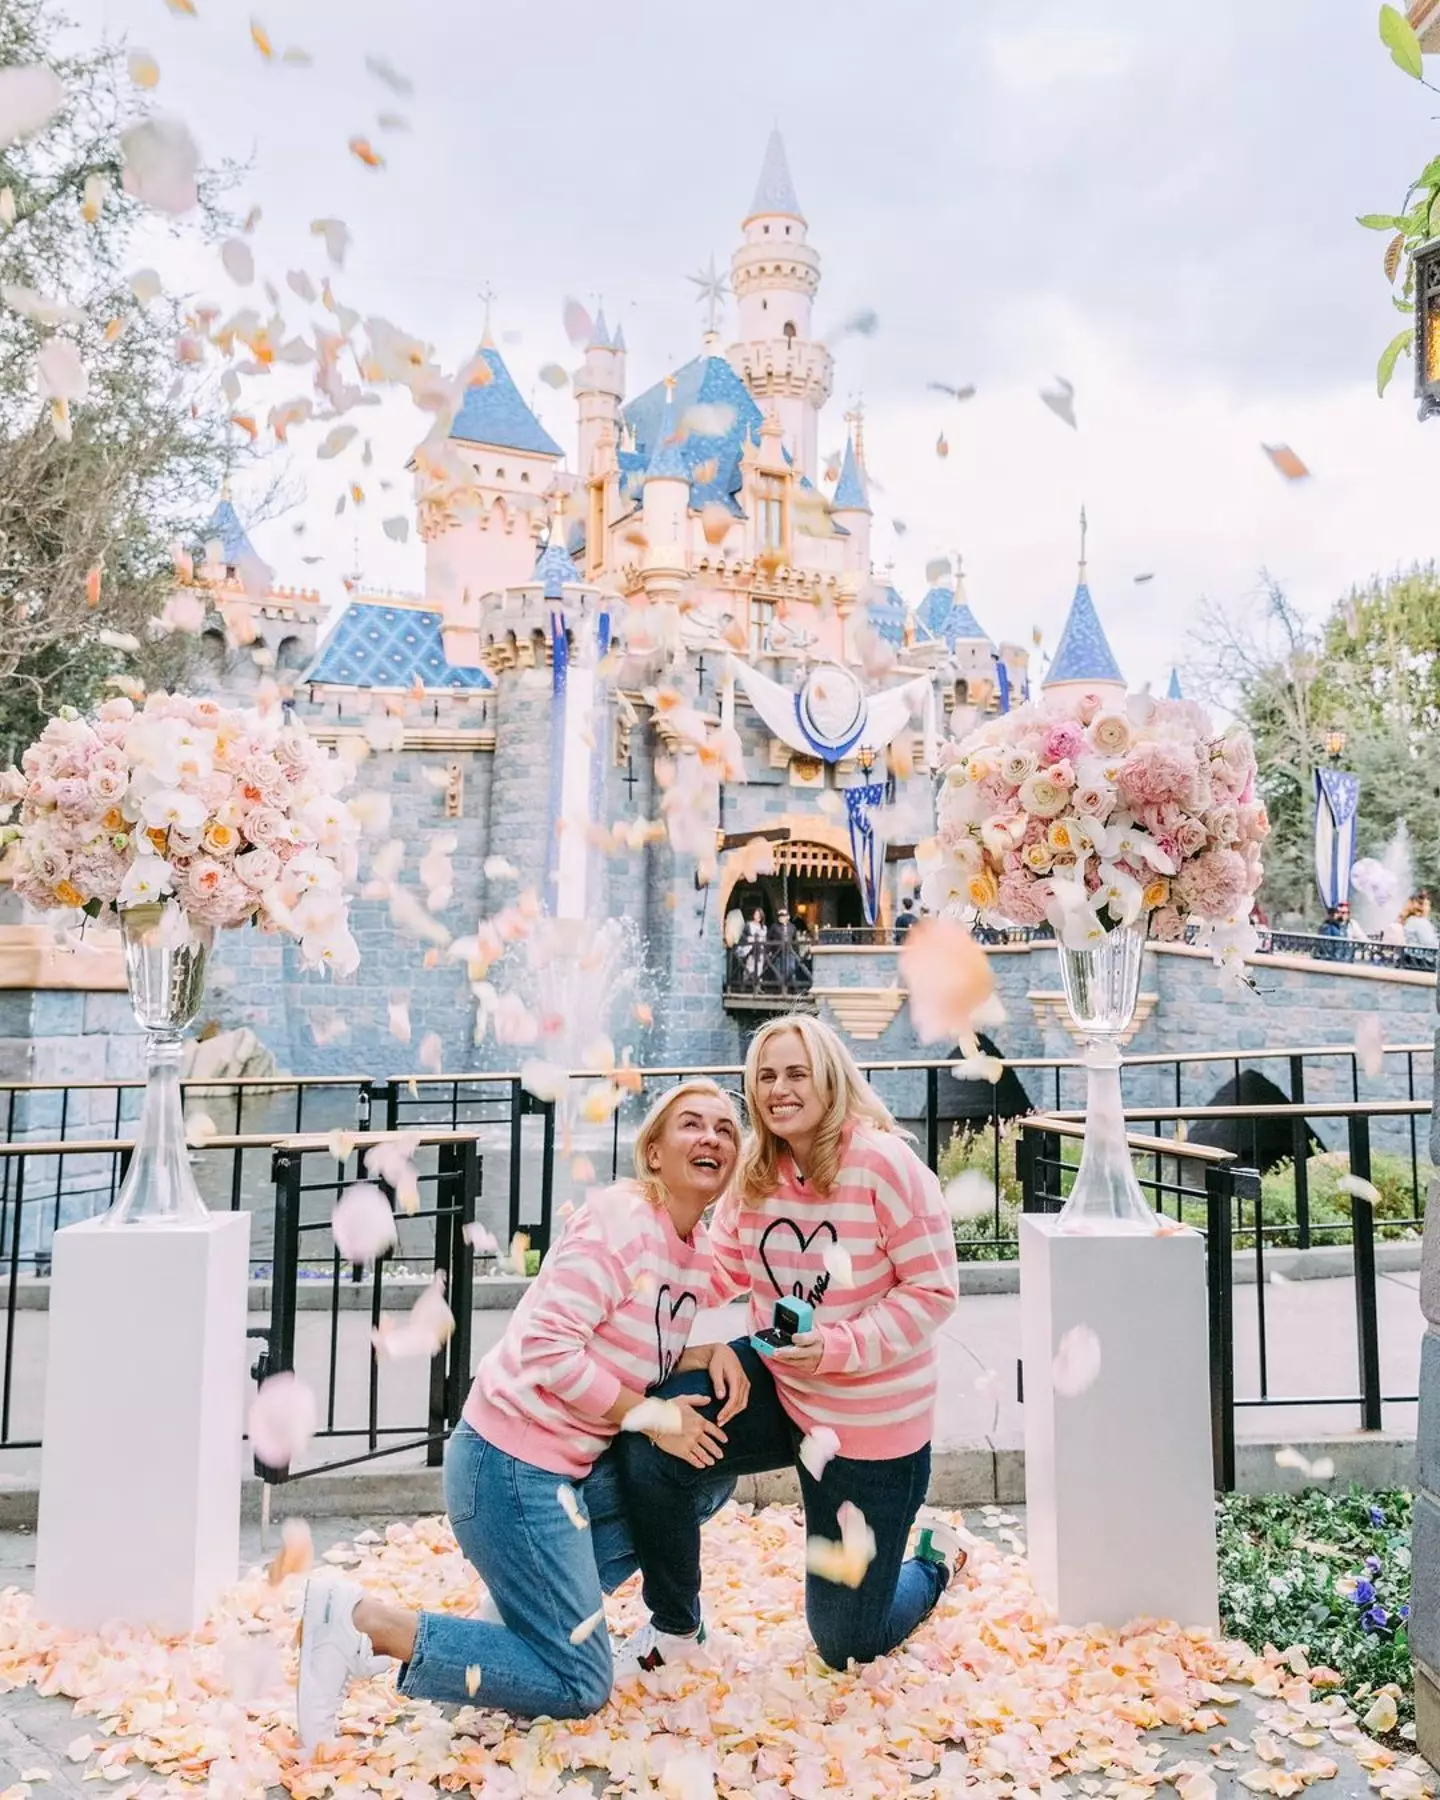 The pair got engaged at Disneyland.